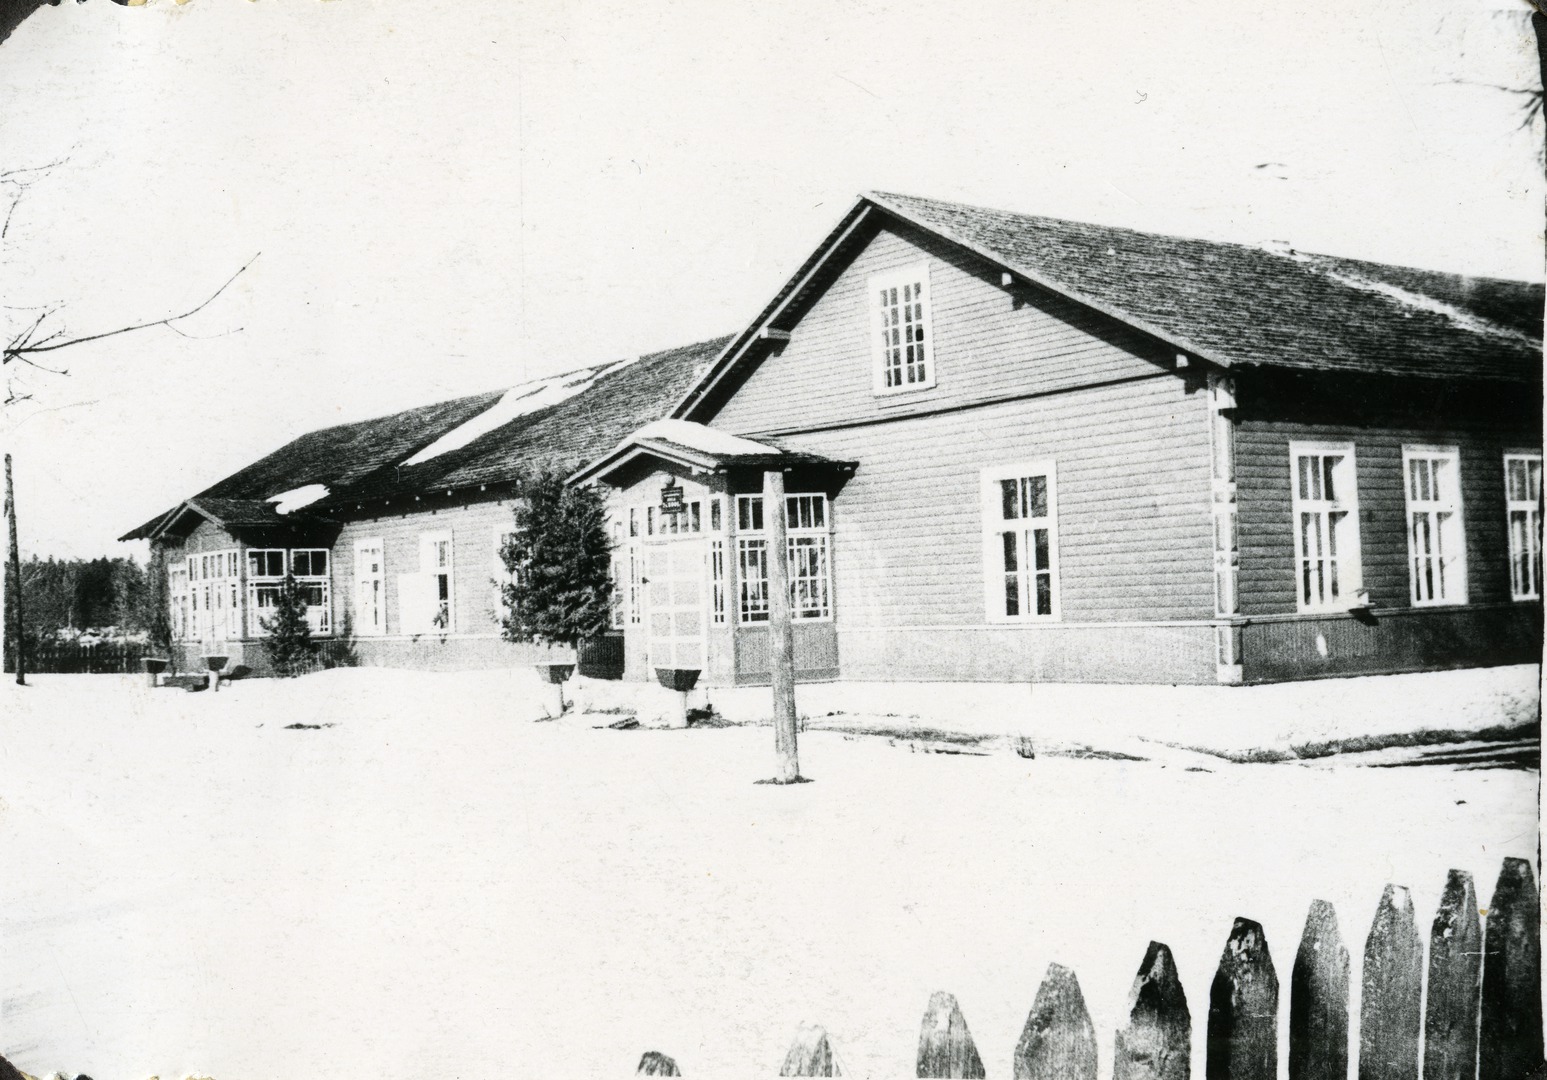 Lääne-Viru county Roela 8-kl School buildings